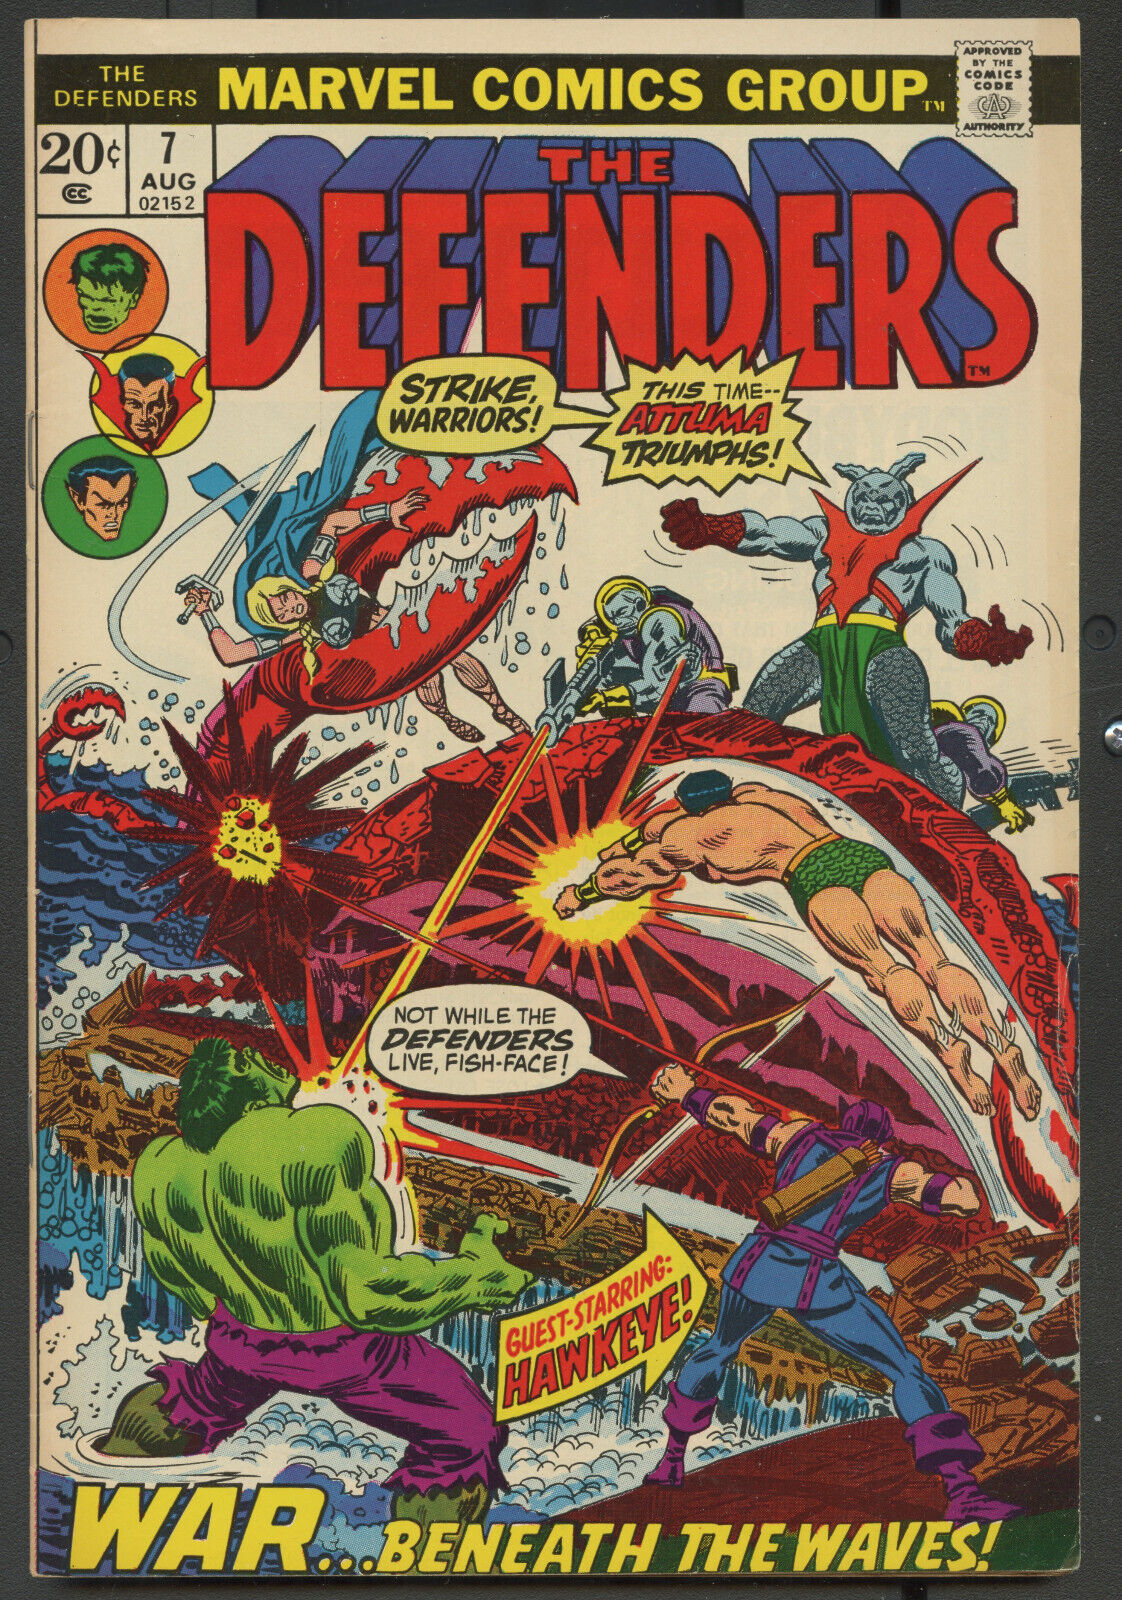 1973 Marvel Comics The Defenders #7 War ... Beneath the Waves!